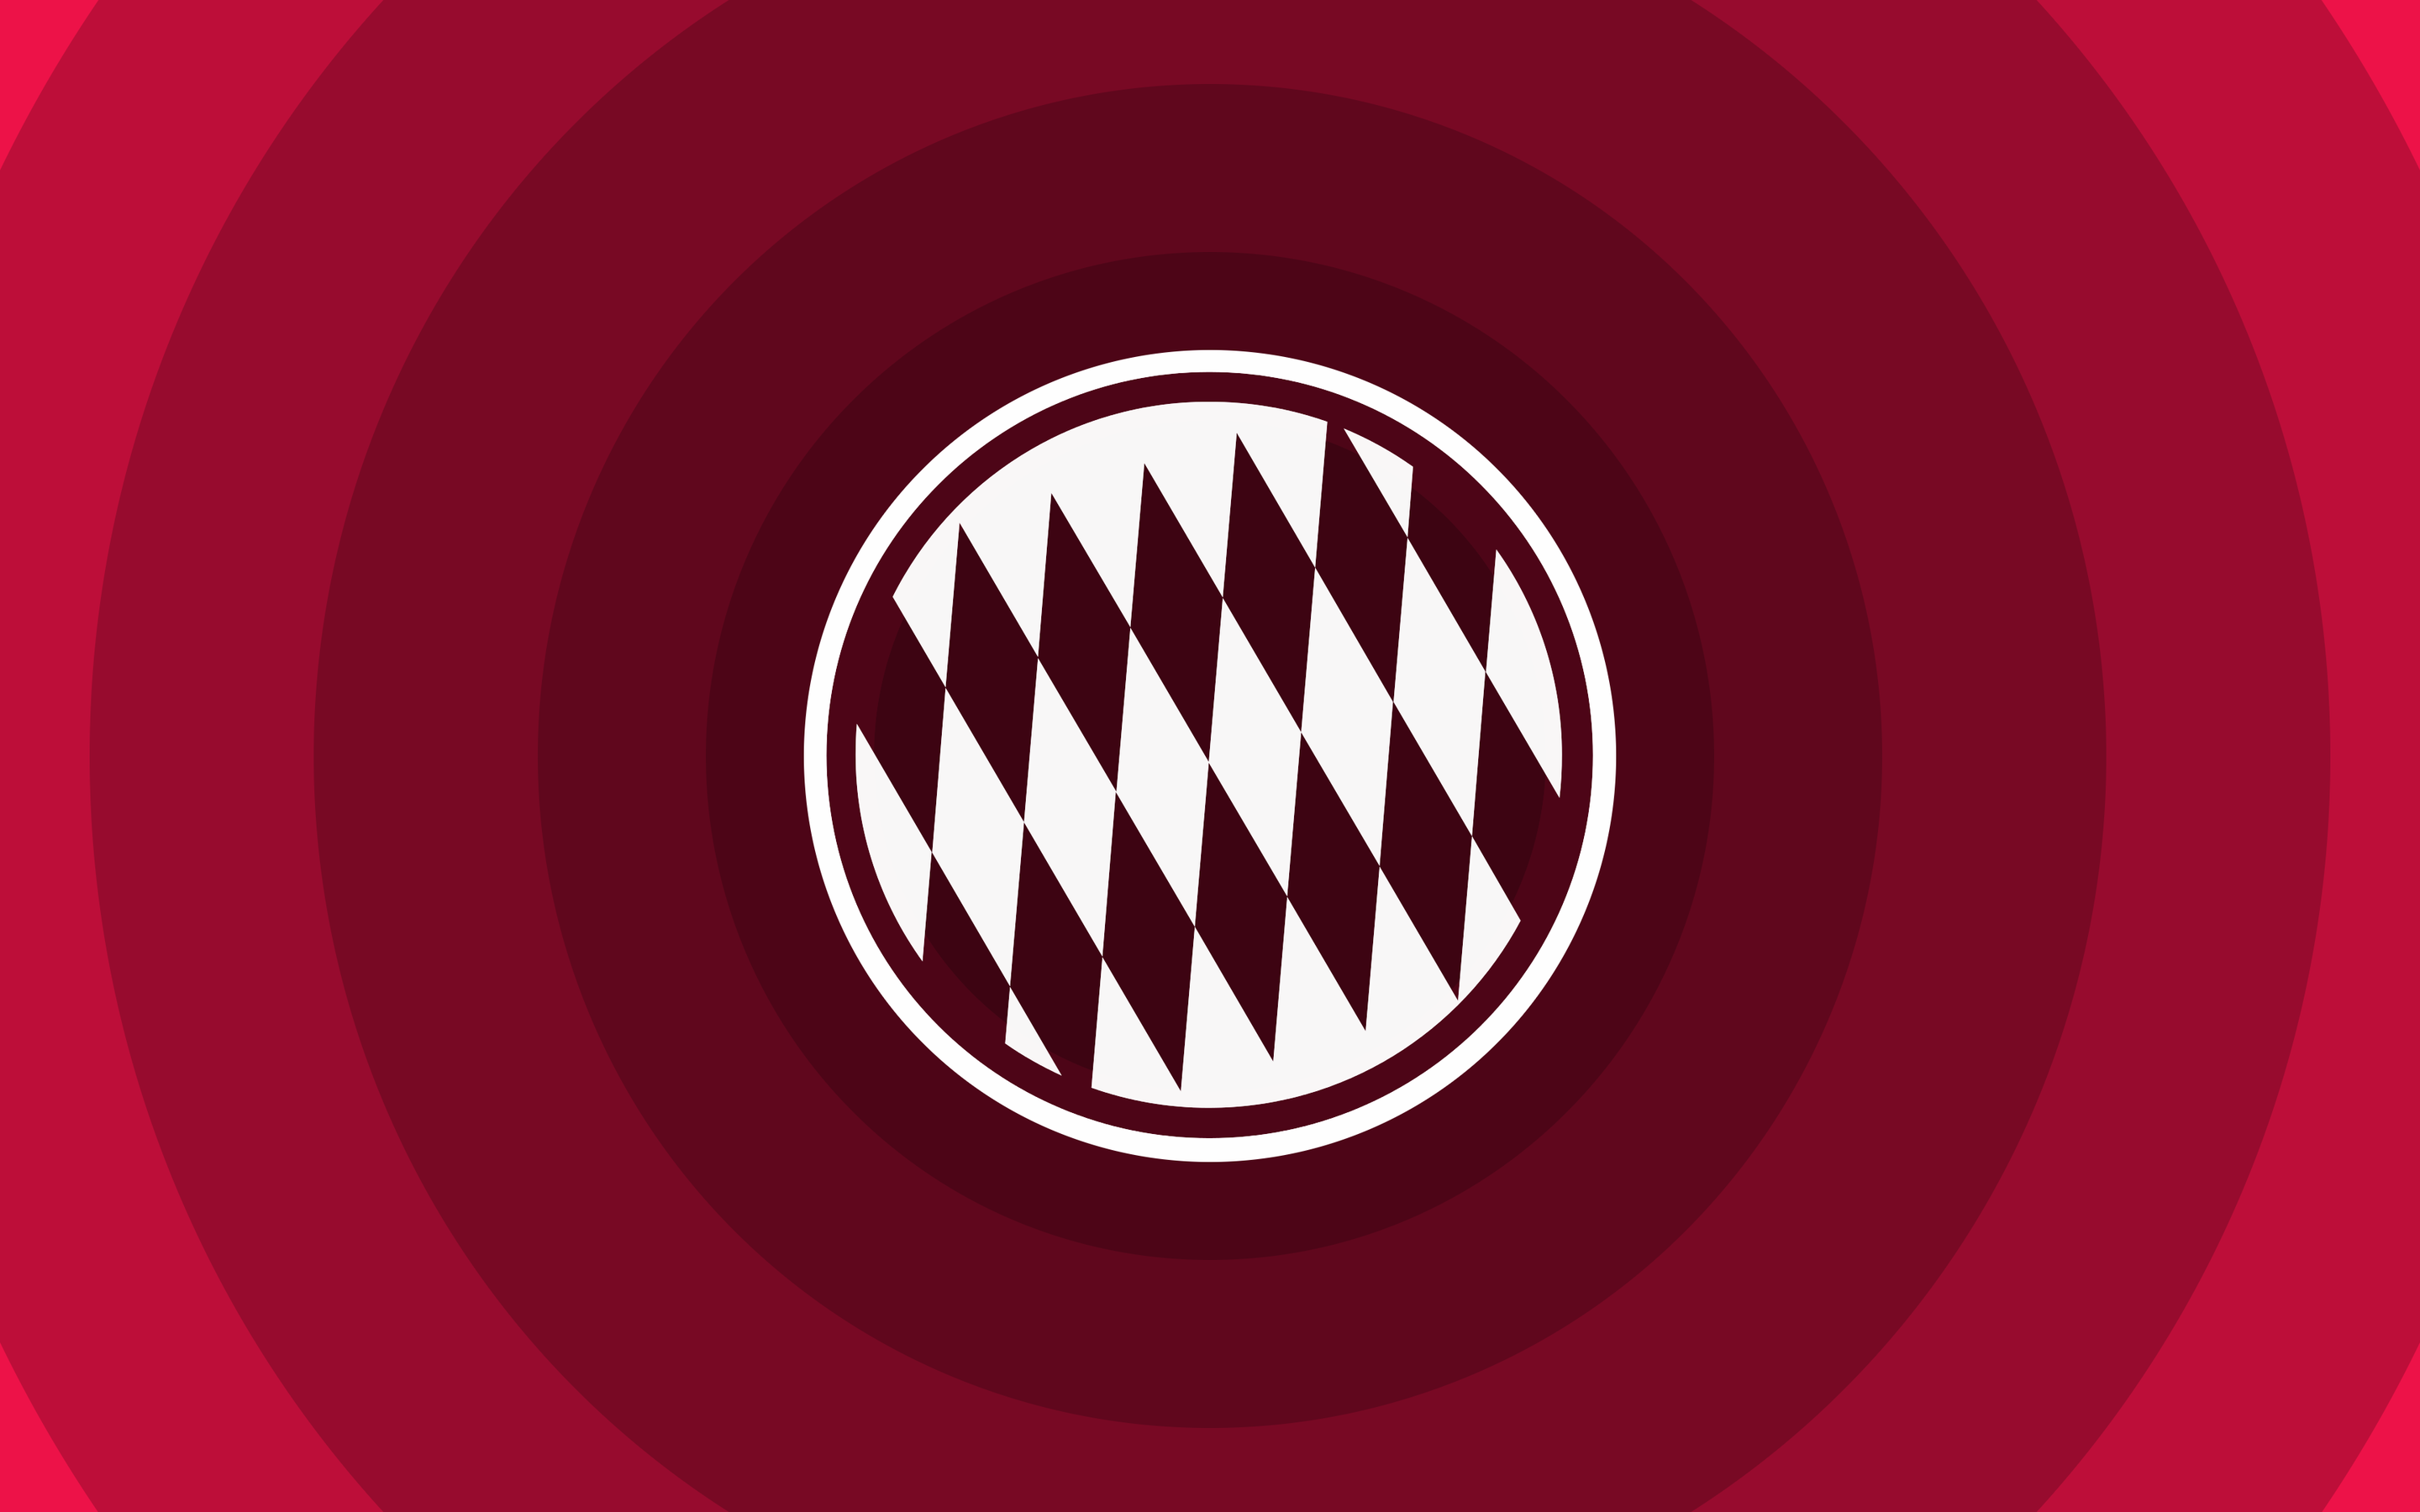 FC Bayern Munich Minimal Logo for 2880 x 1800 Retina Display resolution